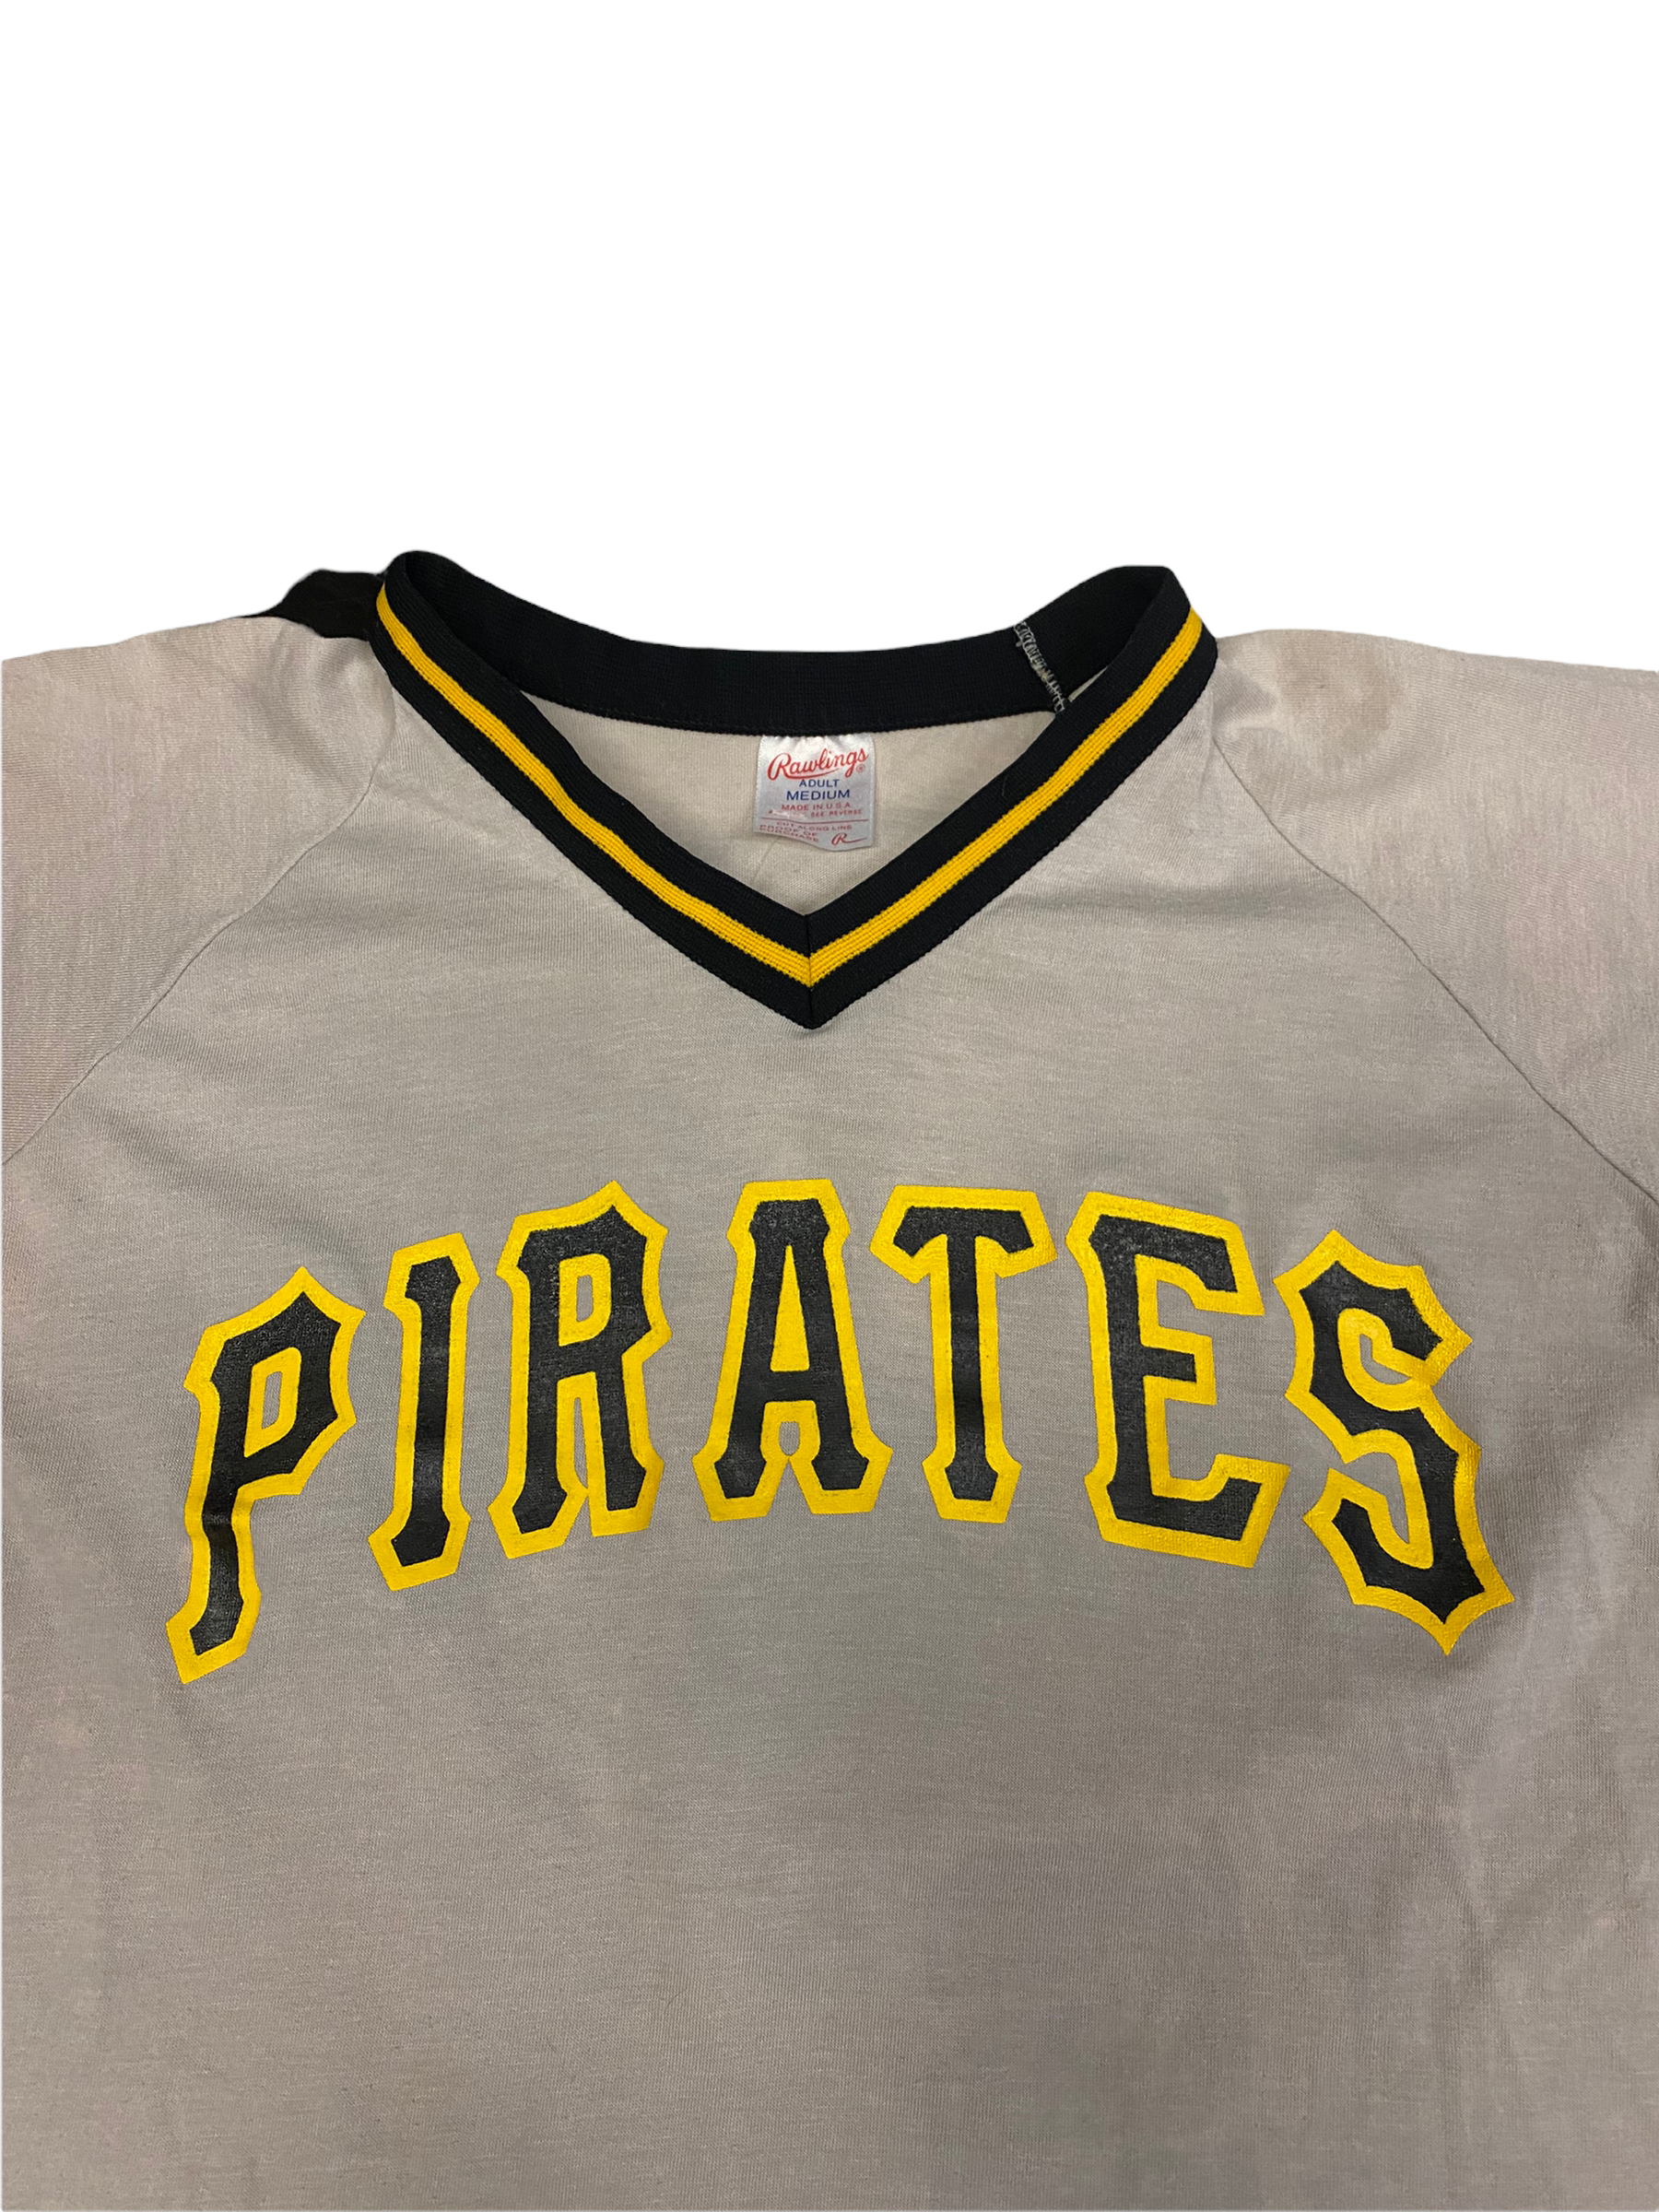 Vintage Pittsburgh Pirates Jersey 